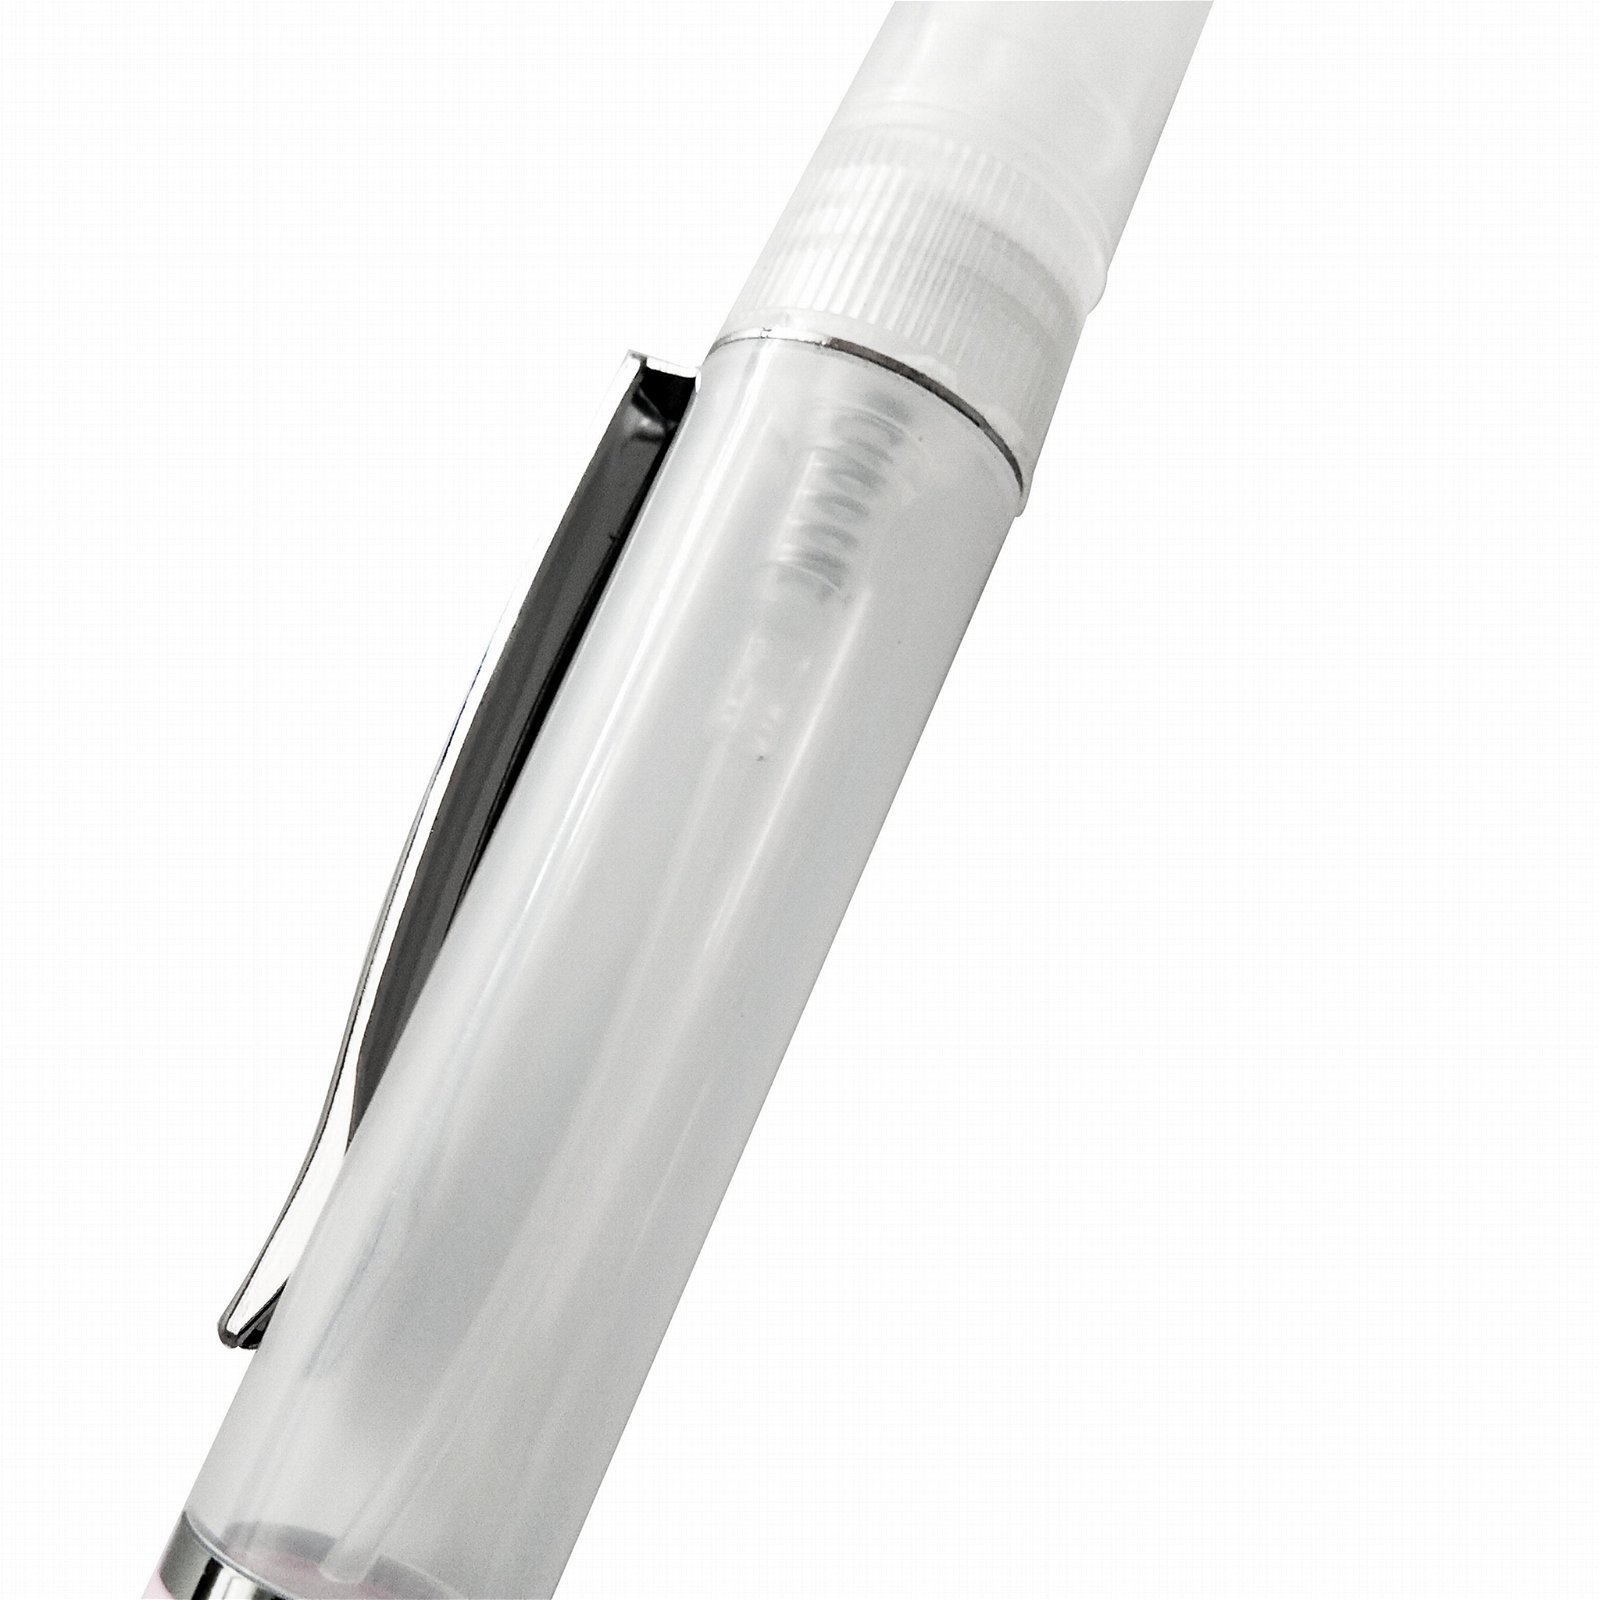 Ballpoint pen with spray bottle for hand sanitizer, alcohol hand sanitizer pens 6